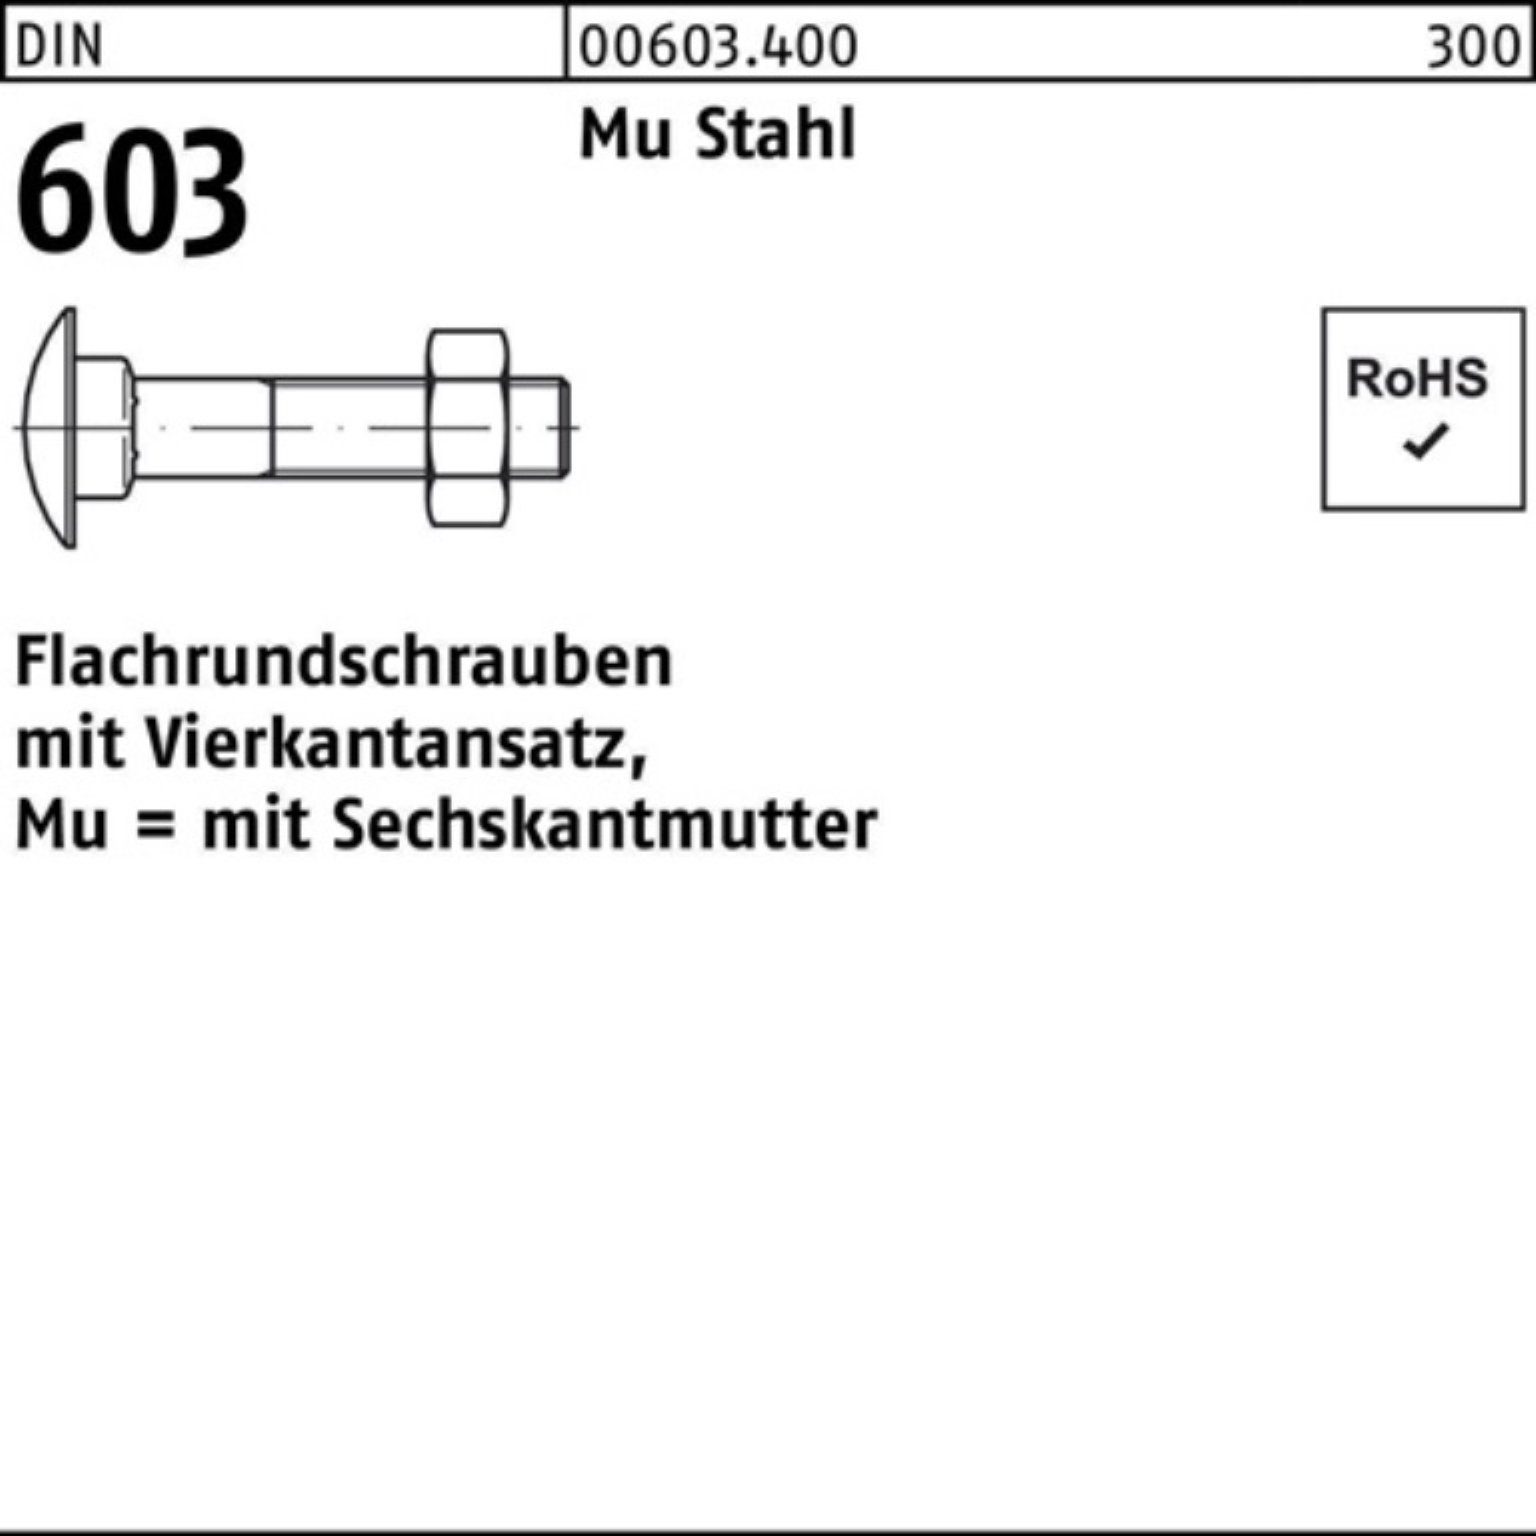 M6x50 DIN Pack Flachrundschraube 200er 603 Schraube Reyher M Vierkantansatz/6-ktmutter